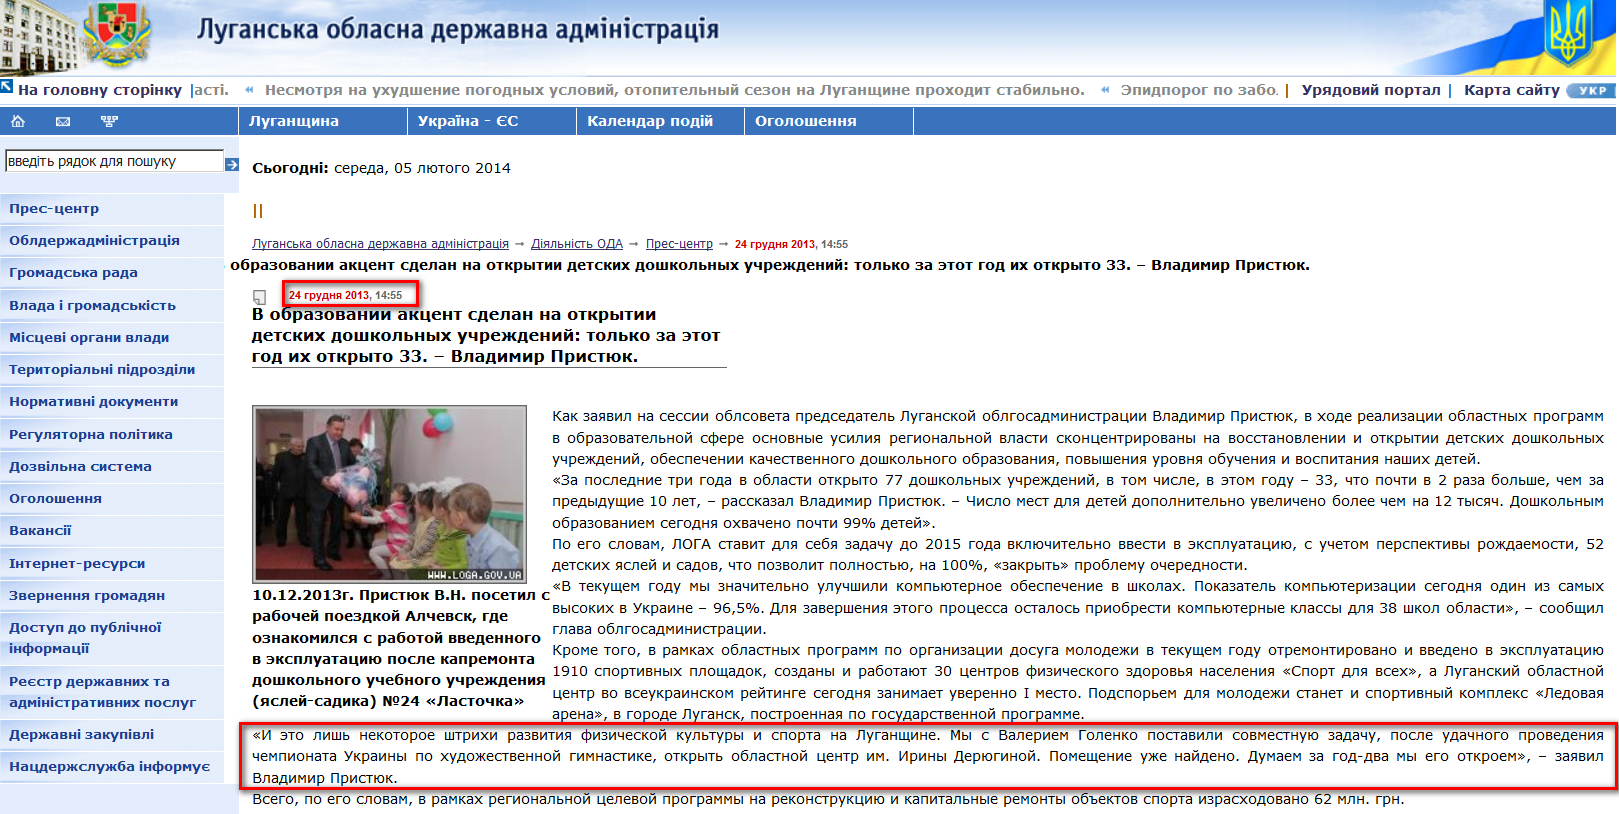 http://www.loga.gov.ua/oda/press/news/2013/12/24/news_62123.html